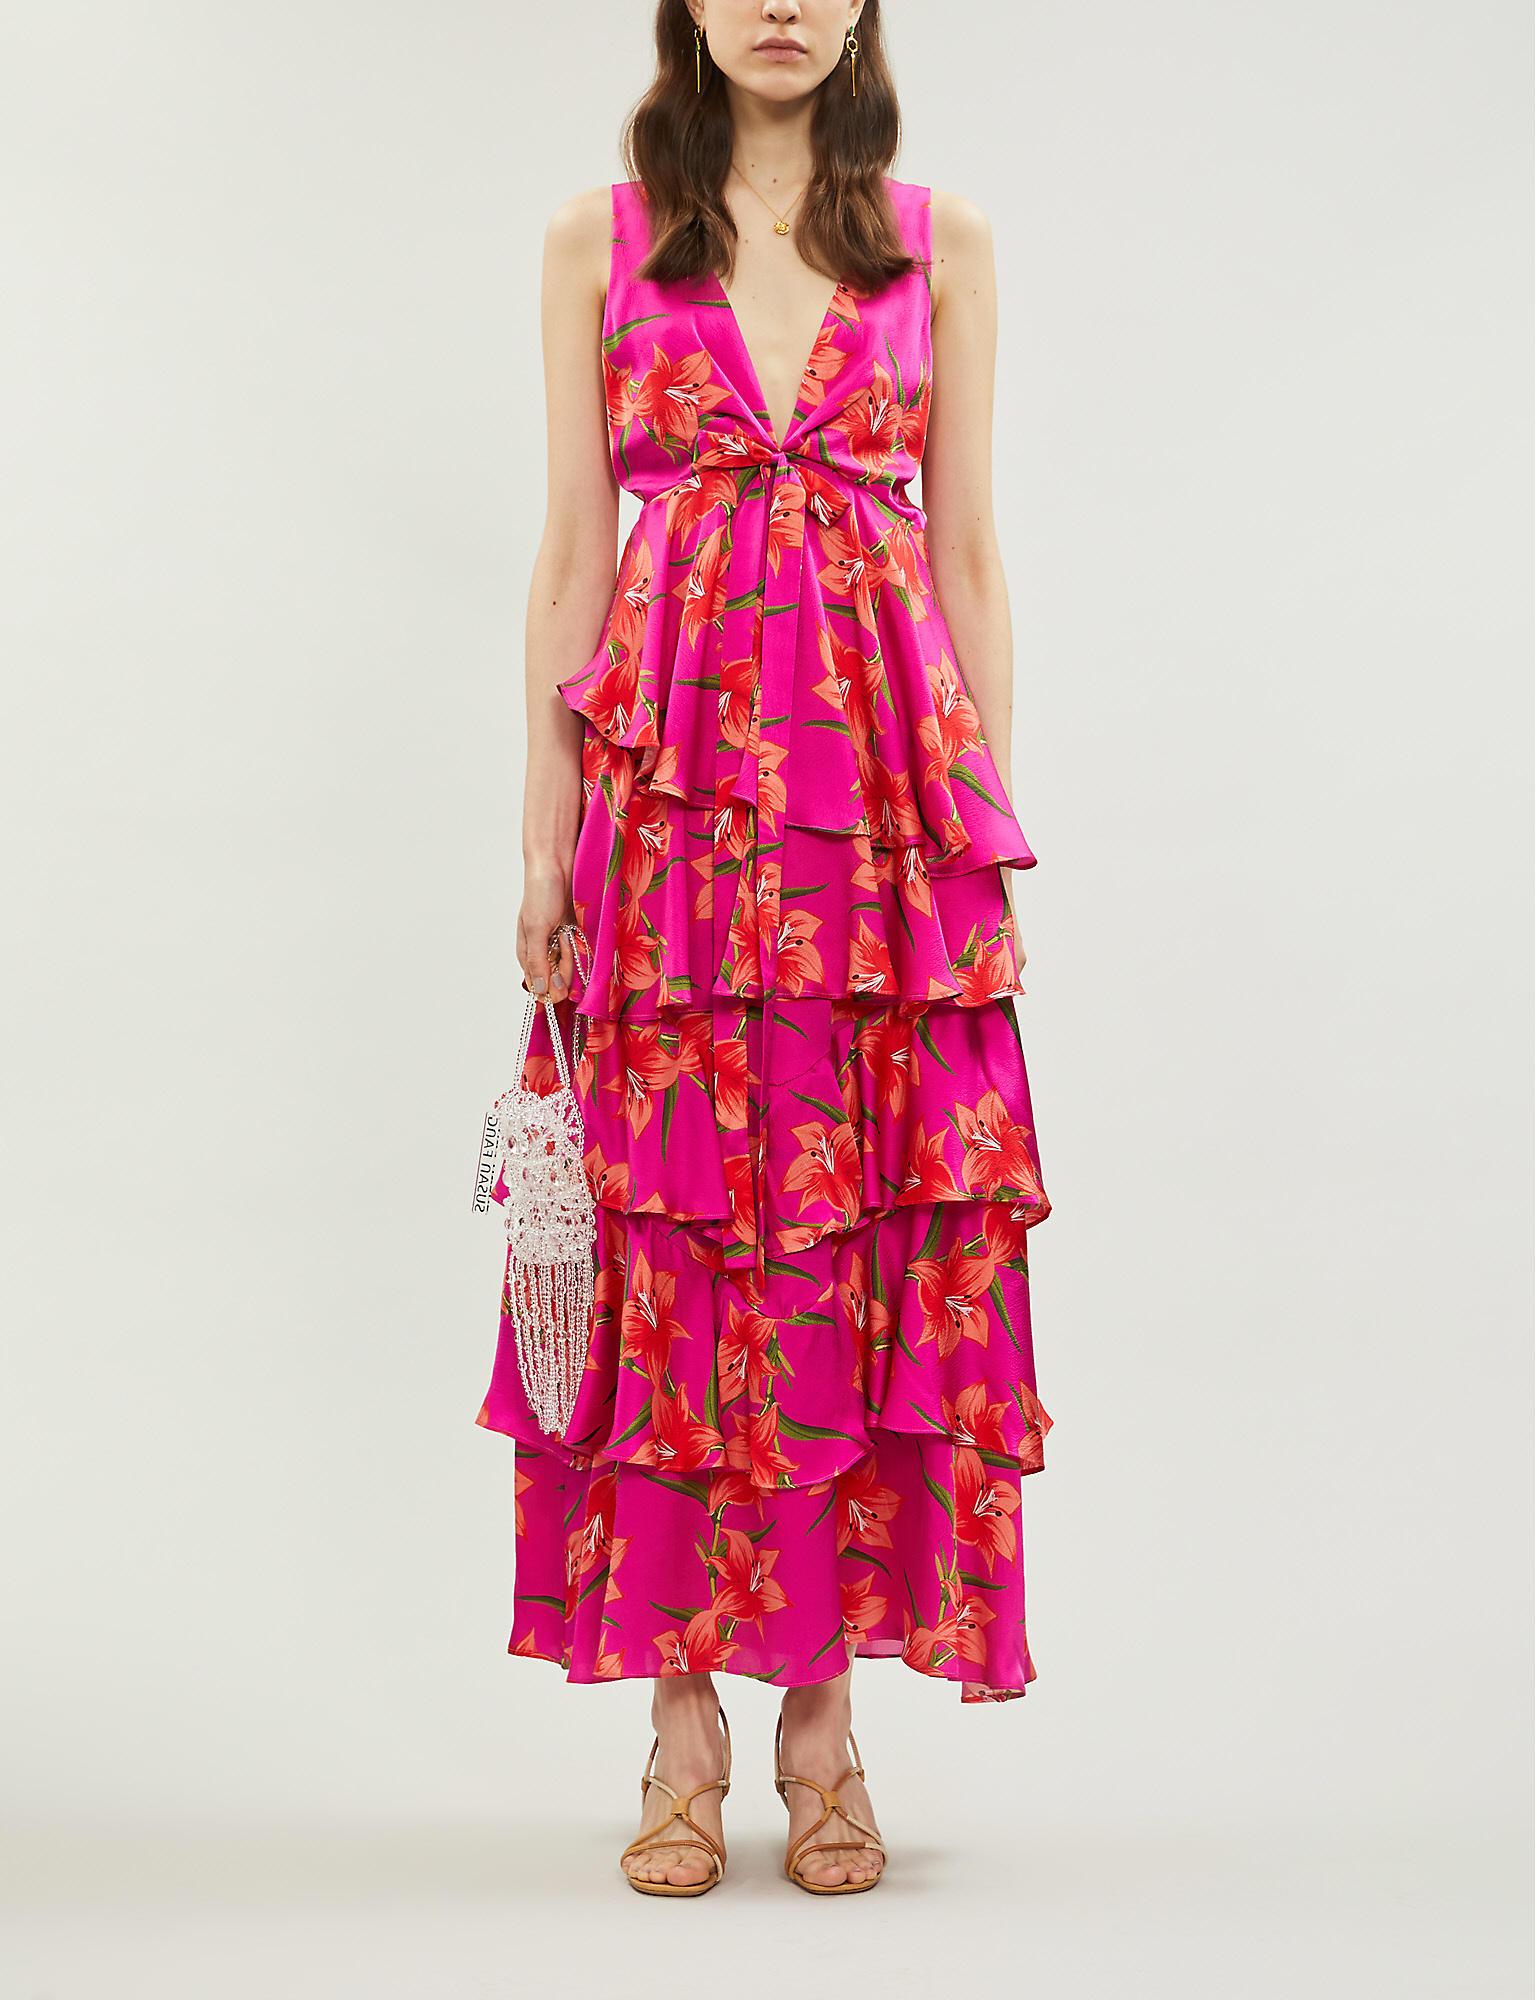 Borgo De Nor Flavia Silk-satin Dress in Pink - Save 21% - Lyst